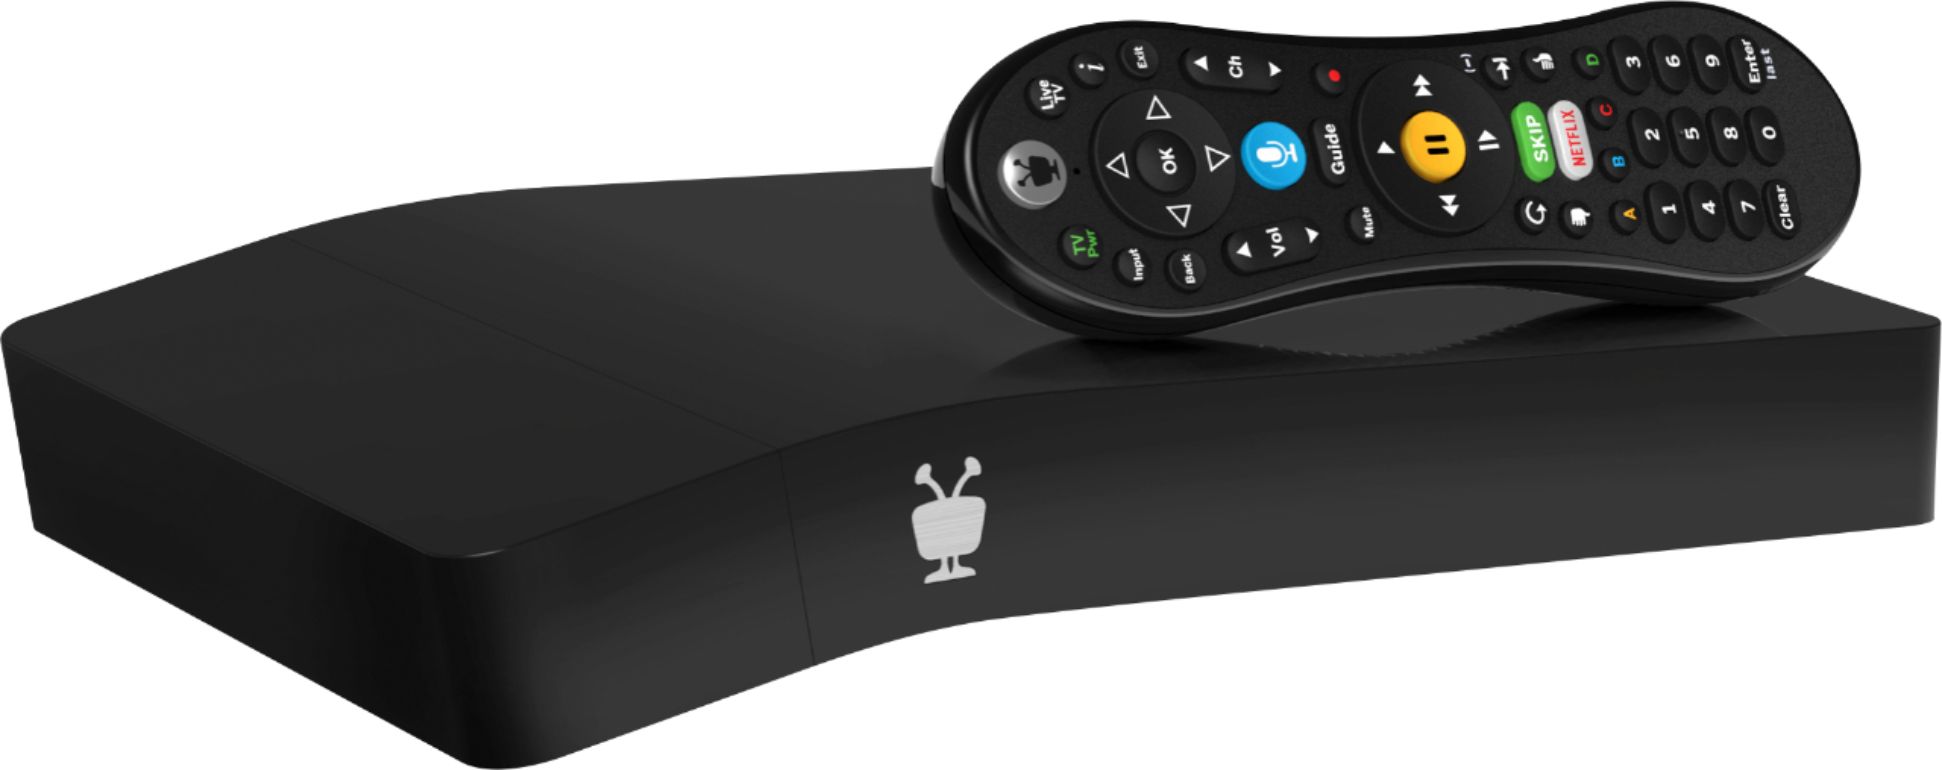 TiVo - BOLT OTA 1TB DVR & Streaming Player - Black